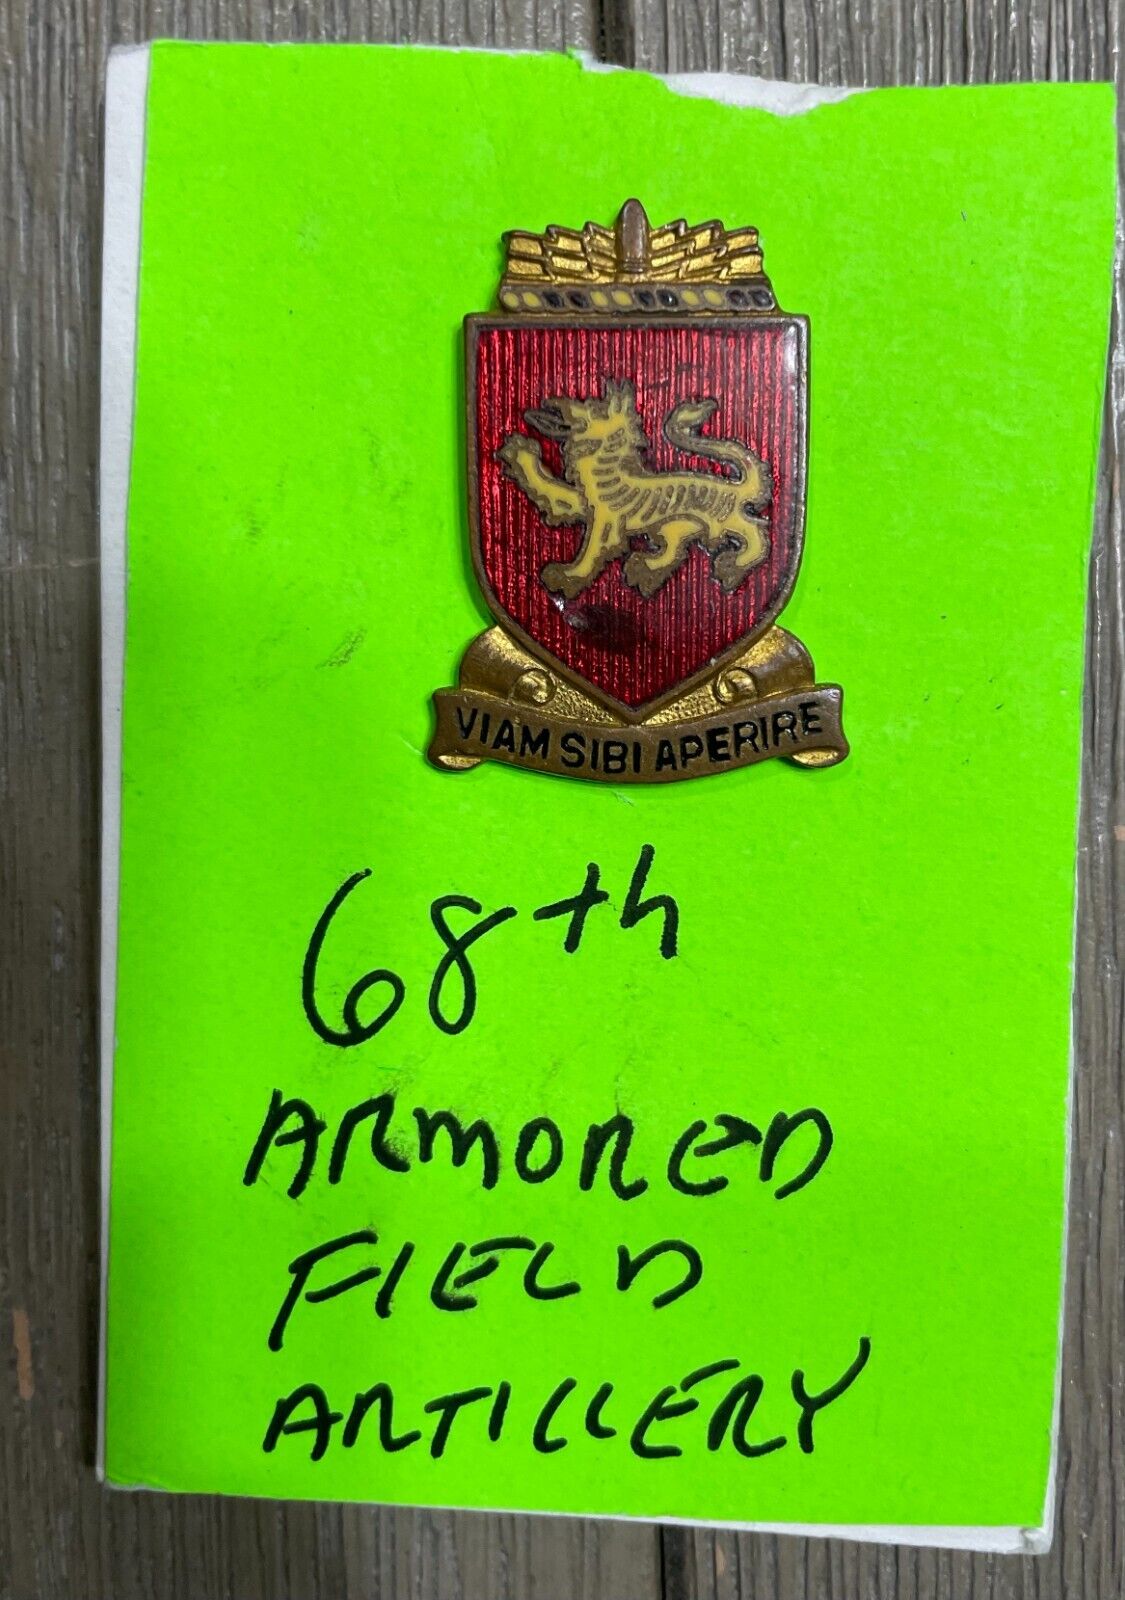 WW2 Era vintage pin insignia 68th Armored Field Artillery